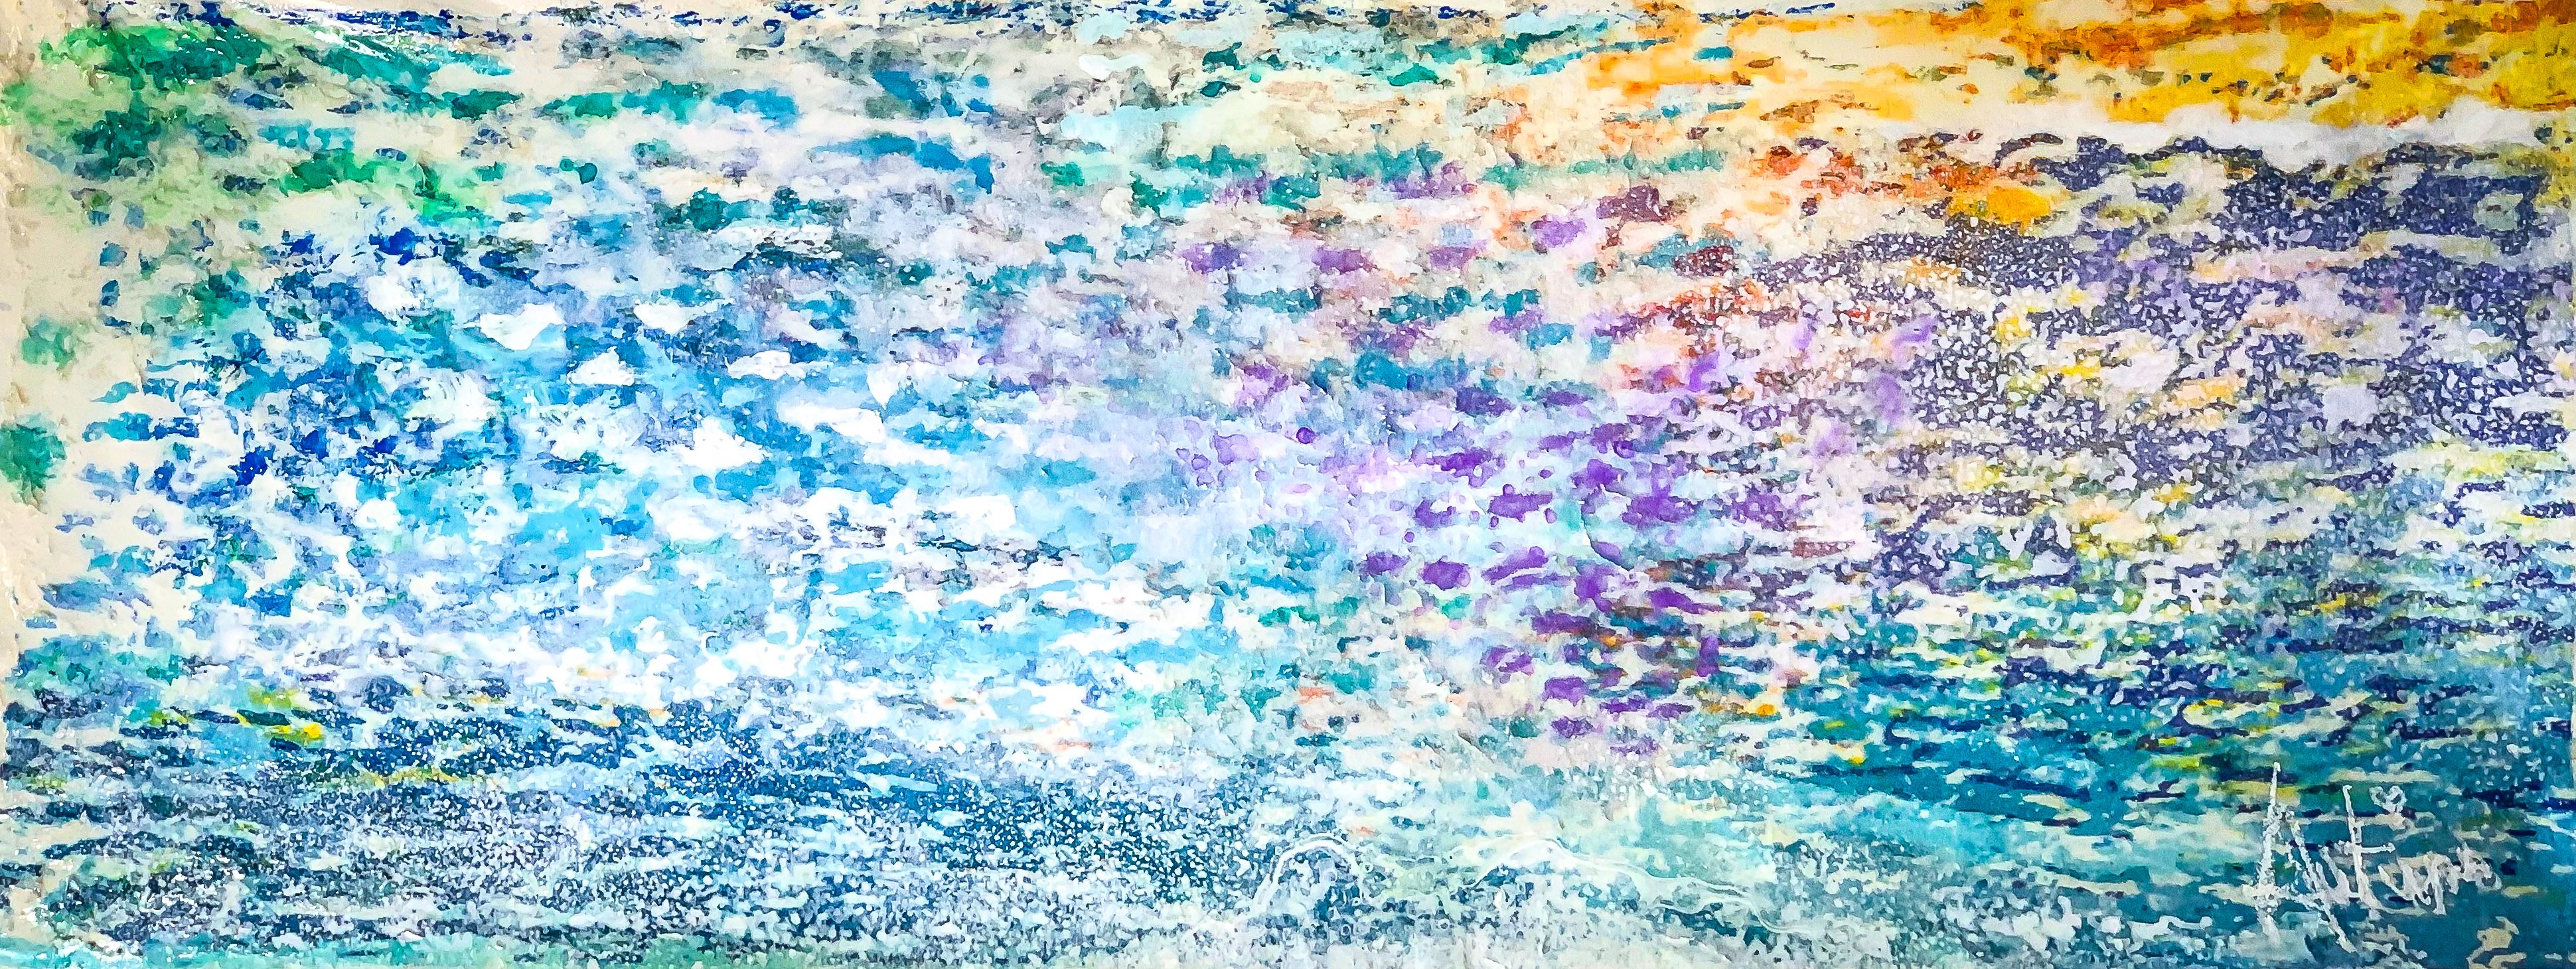 AUTUMN de FOREST - Moody Sky - Acrylic on Canvas - 22x60 inches